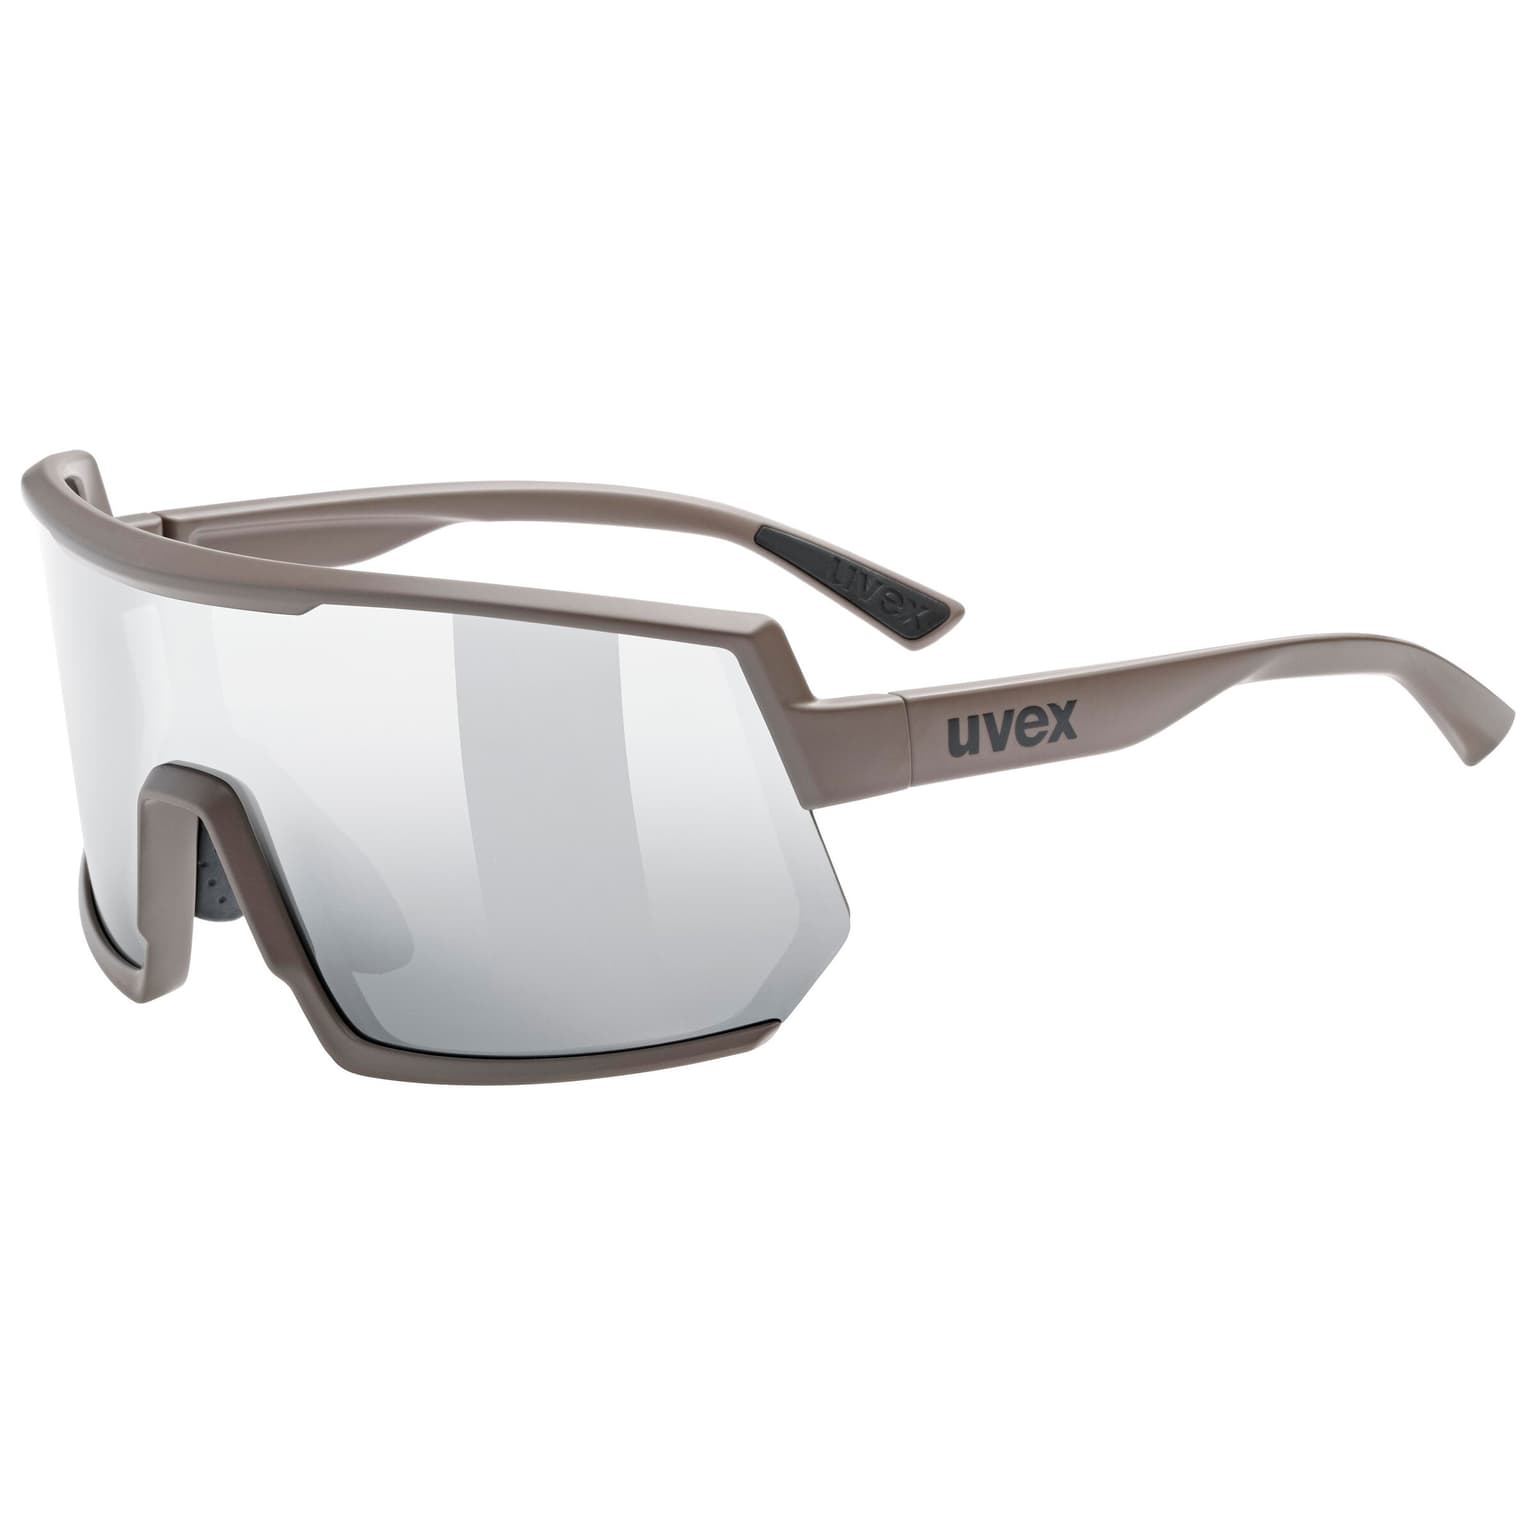 Uvex Uvex Allround Occhiali sportivi grigio-chiaro 1